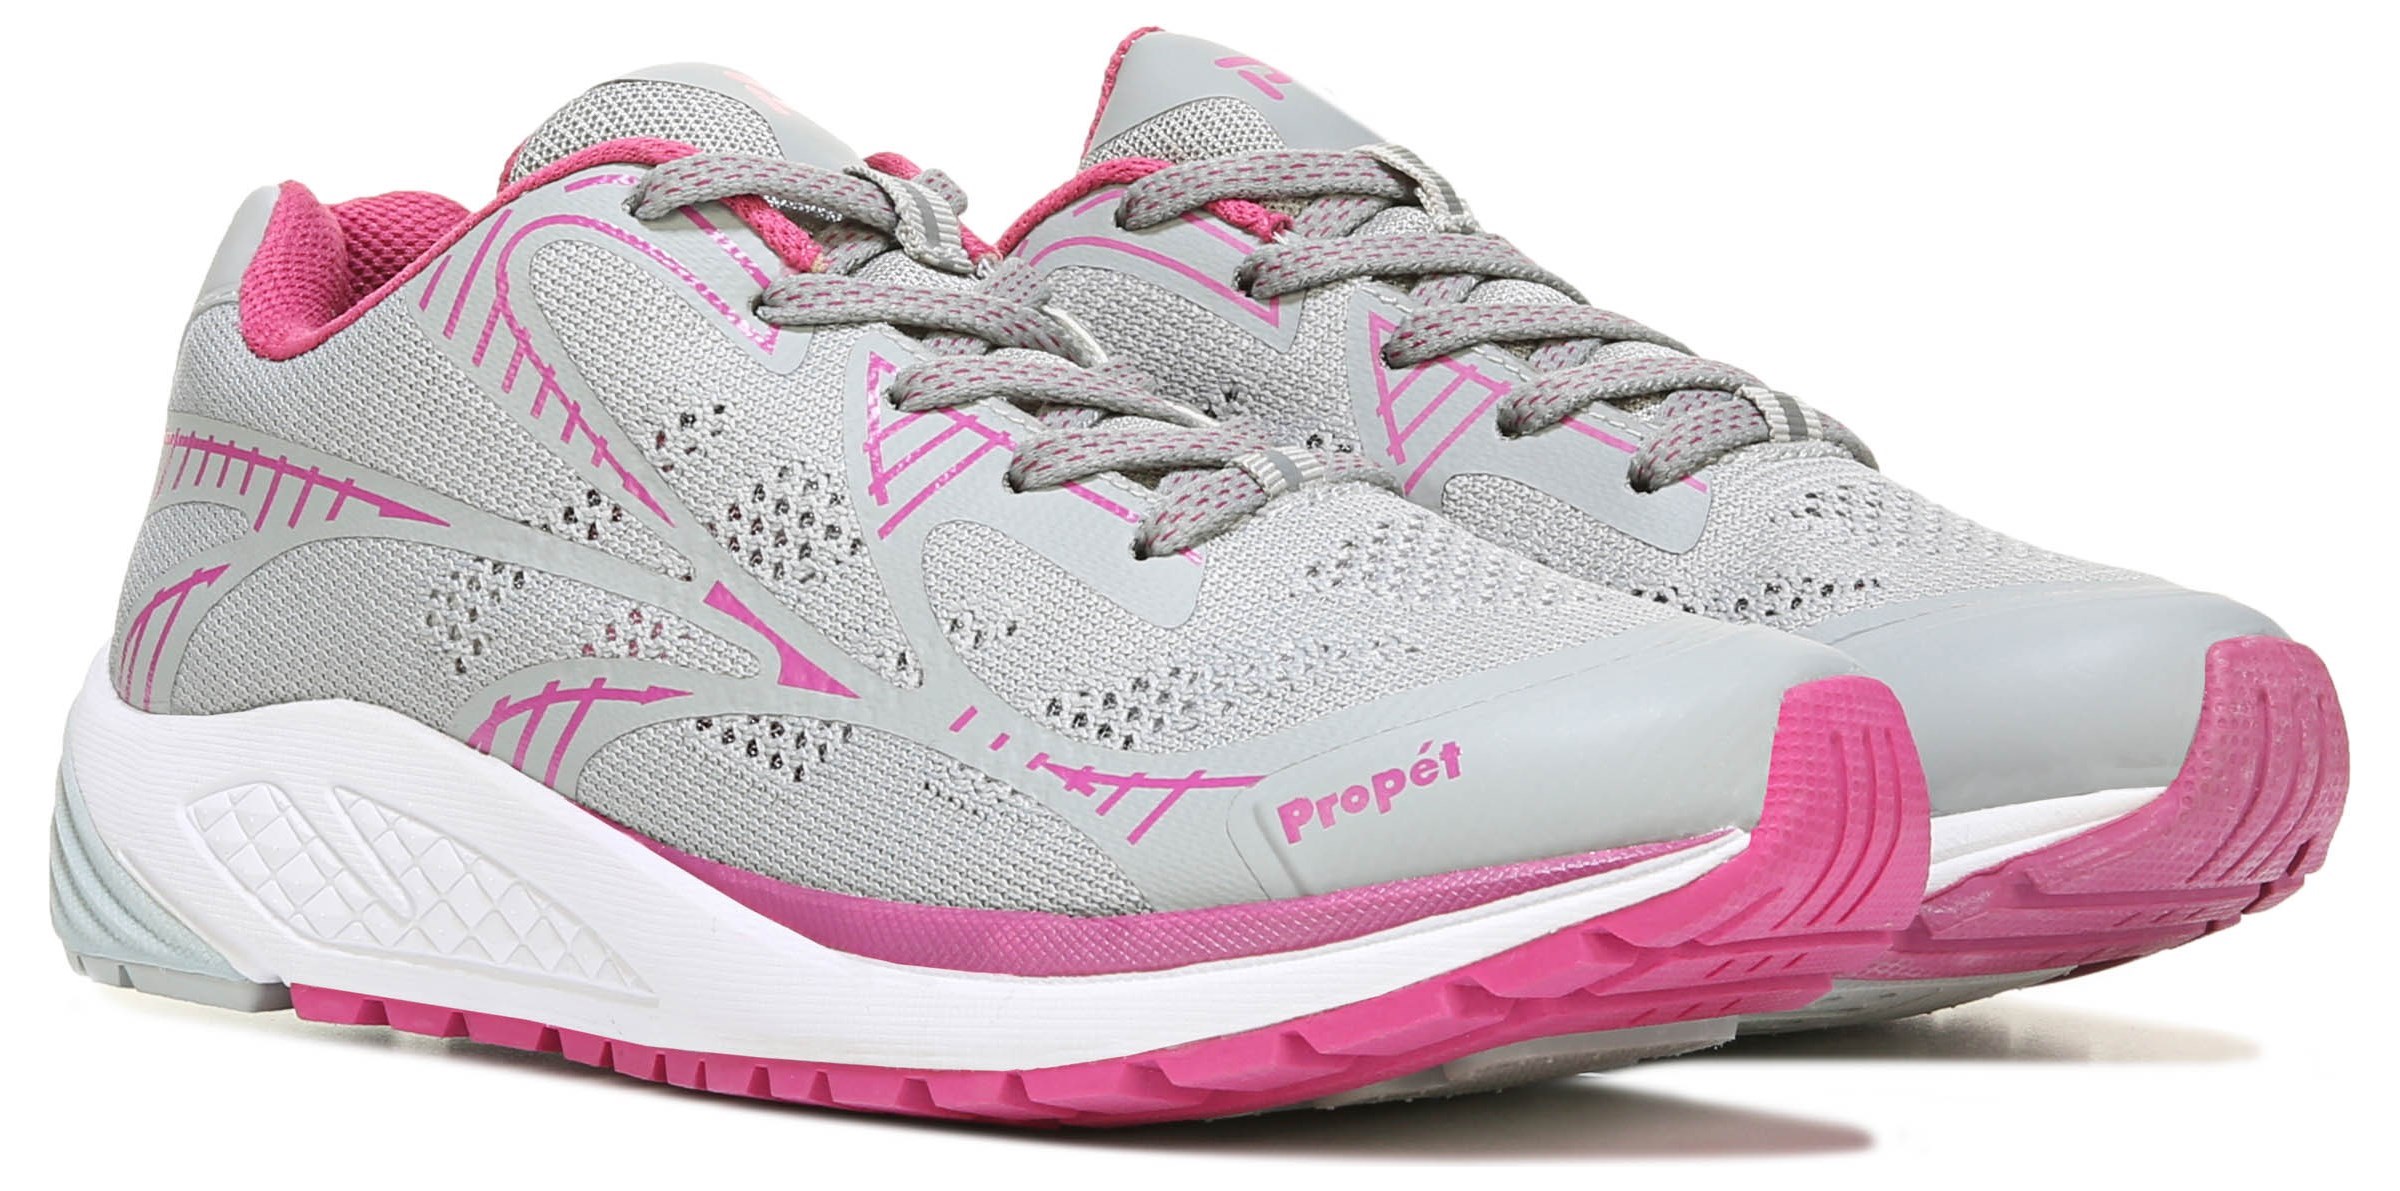 Details about   Propet Women's Propet One Running Shoe Choose SZ/color 